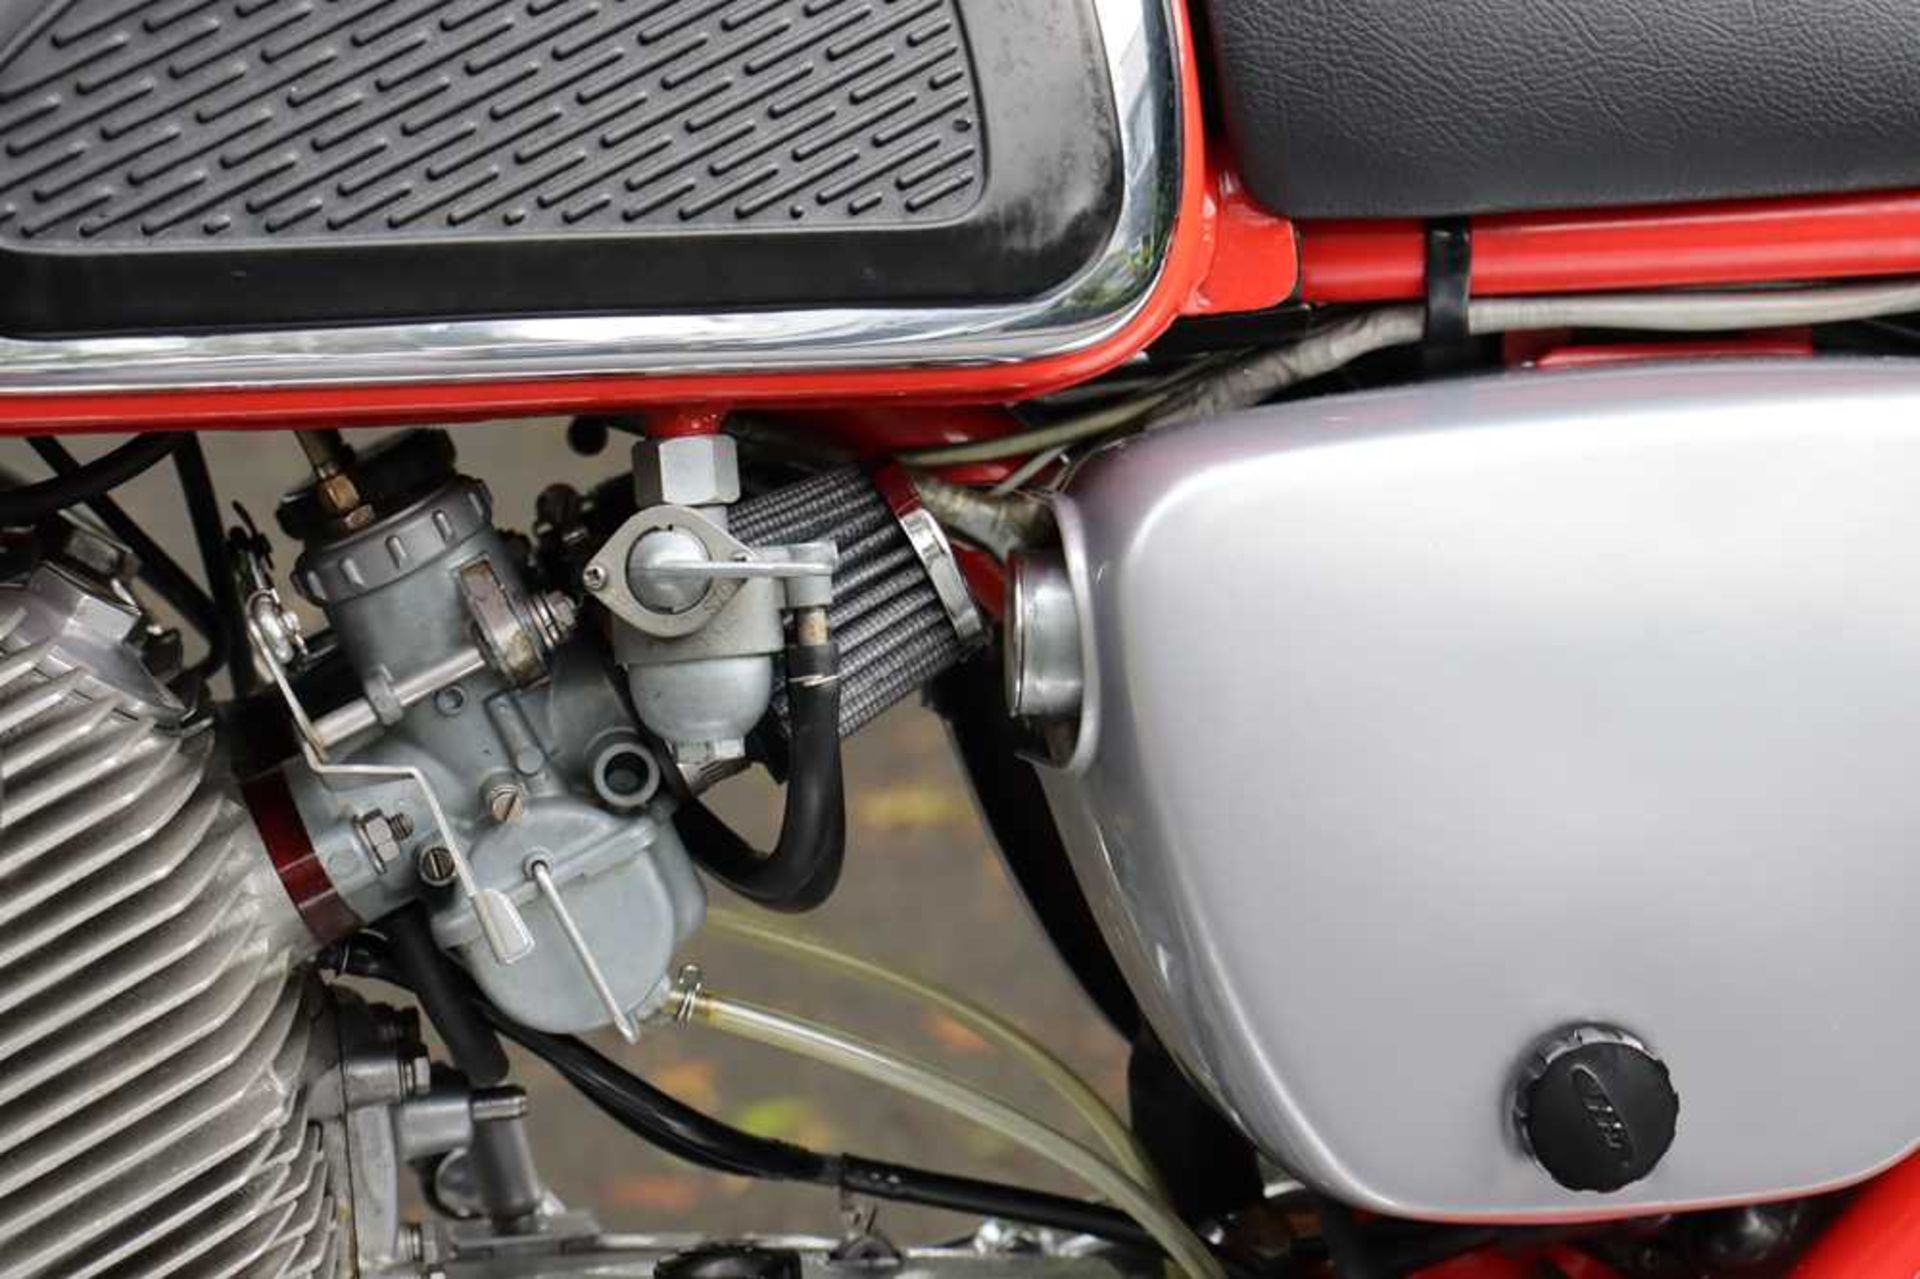 1966 Honda CB77 Restored to a high standard - Image 50 of 65